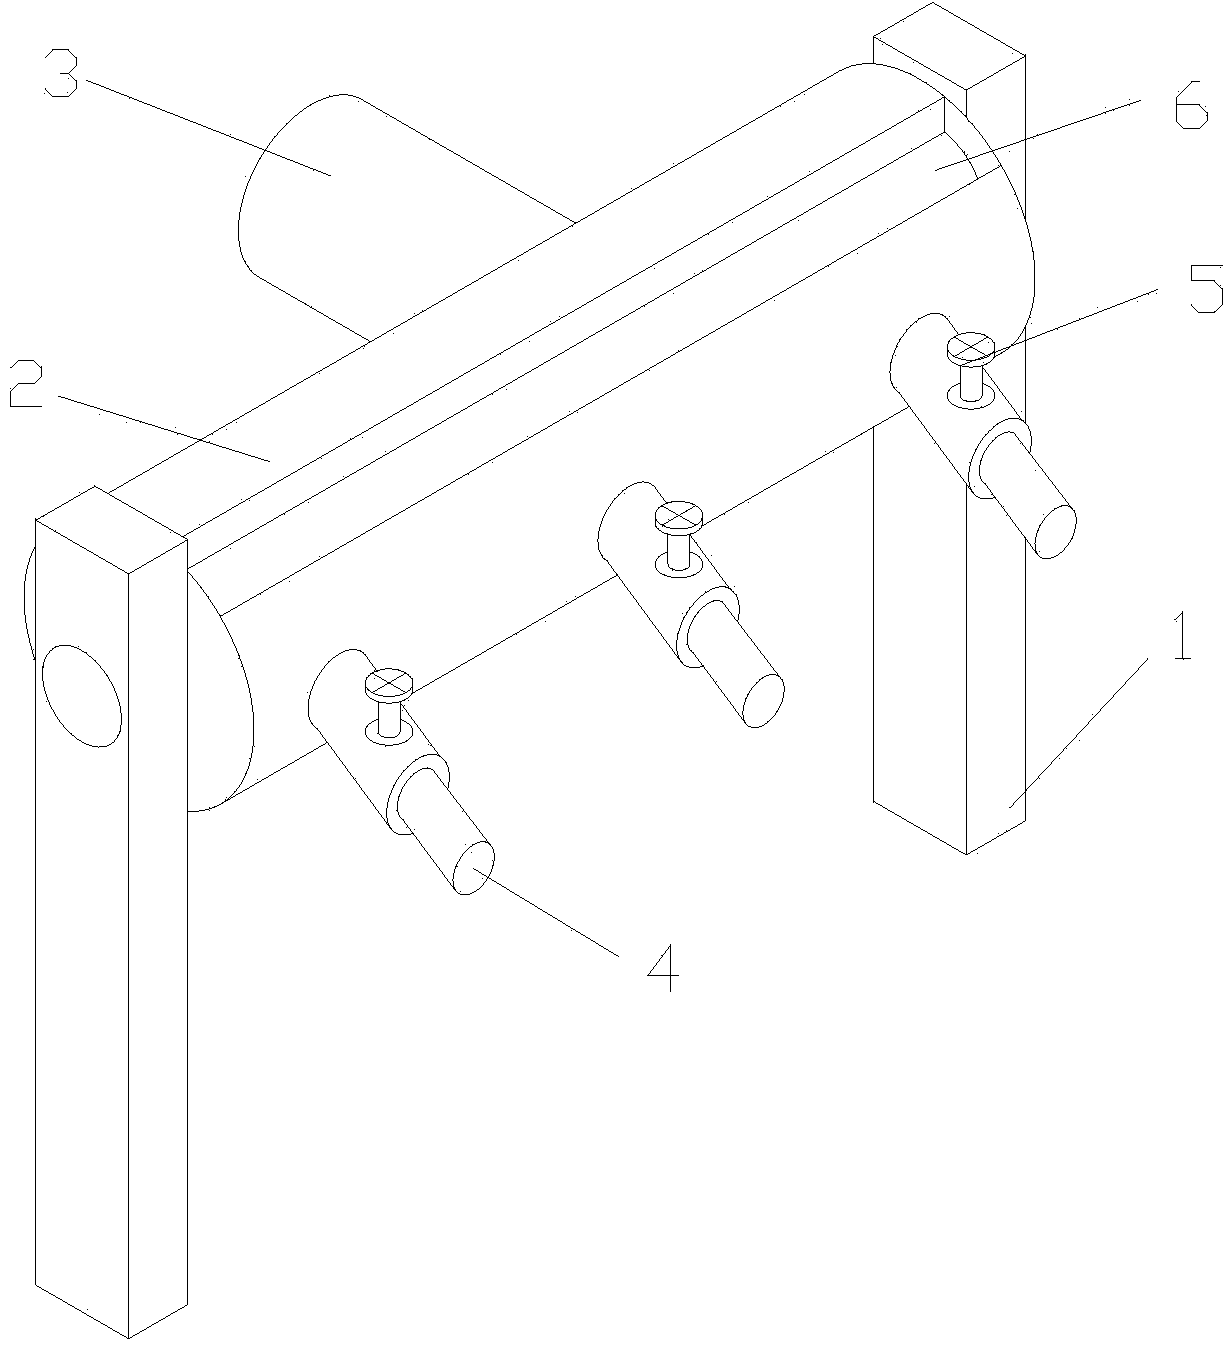 Multi-connector casting slurry dividing mechanism